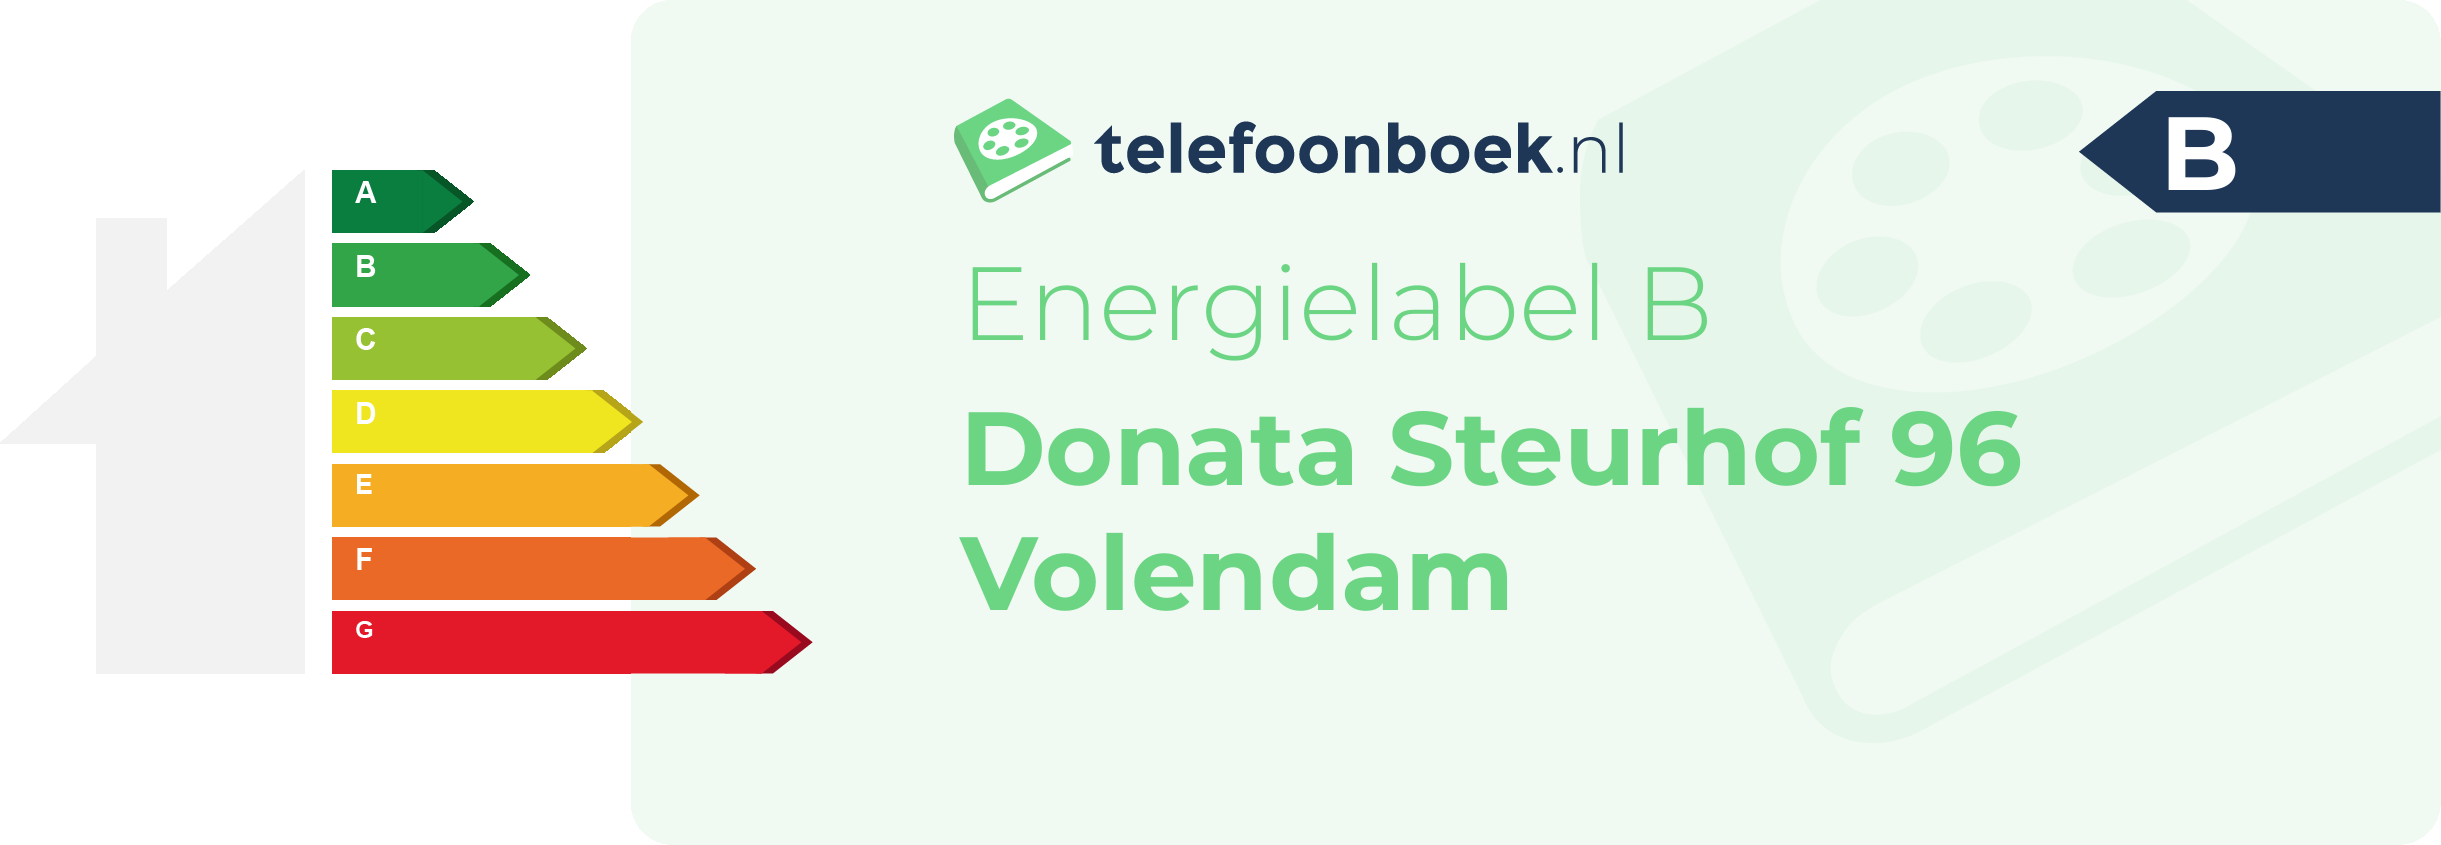 Energielabel Donata Steurhof 96 Volendam